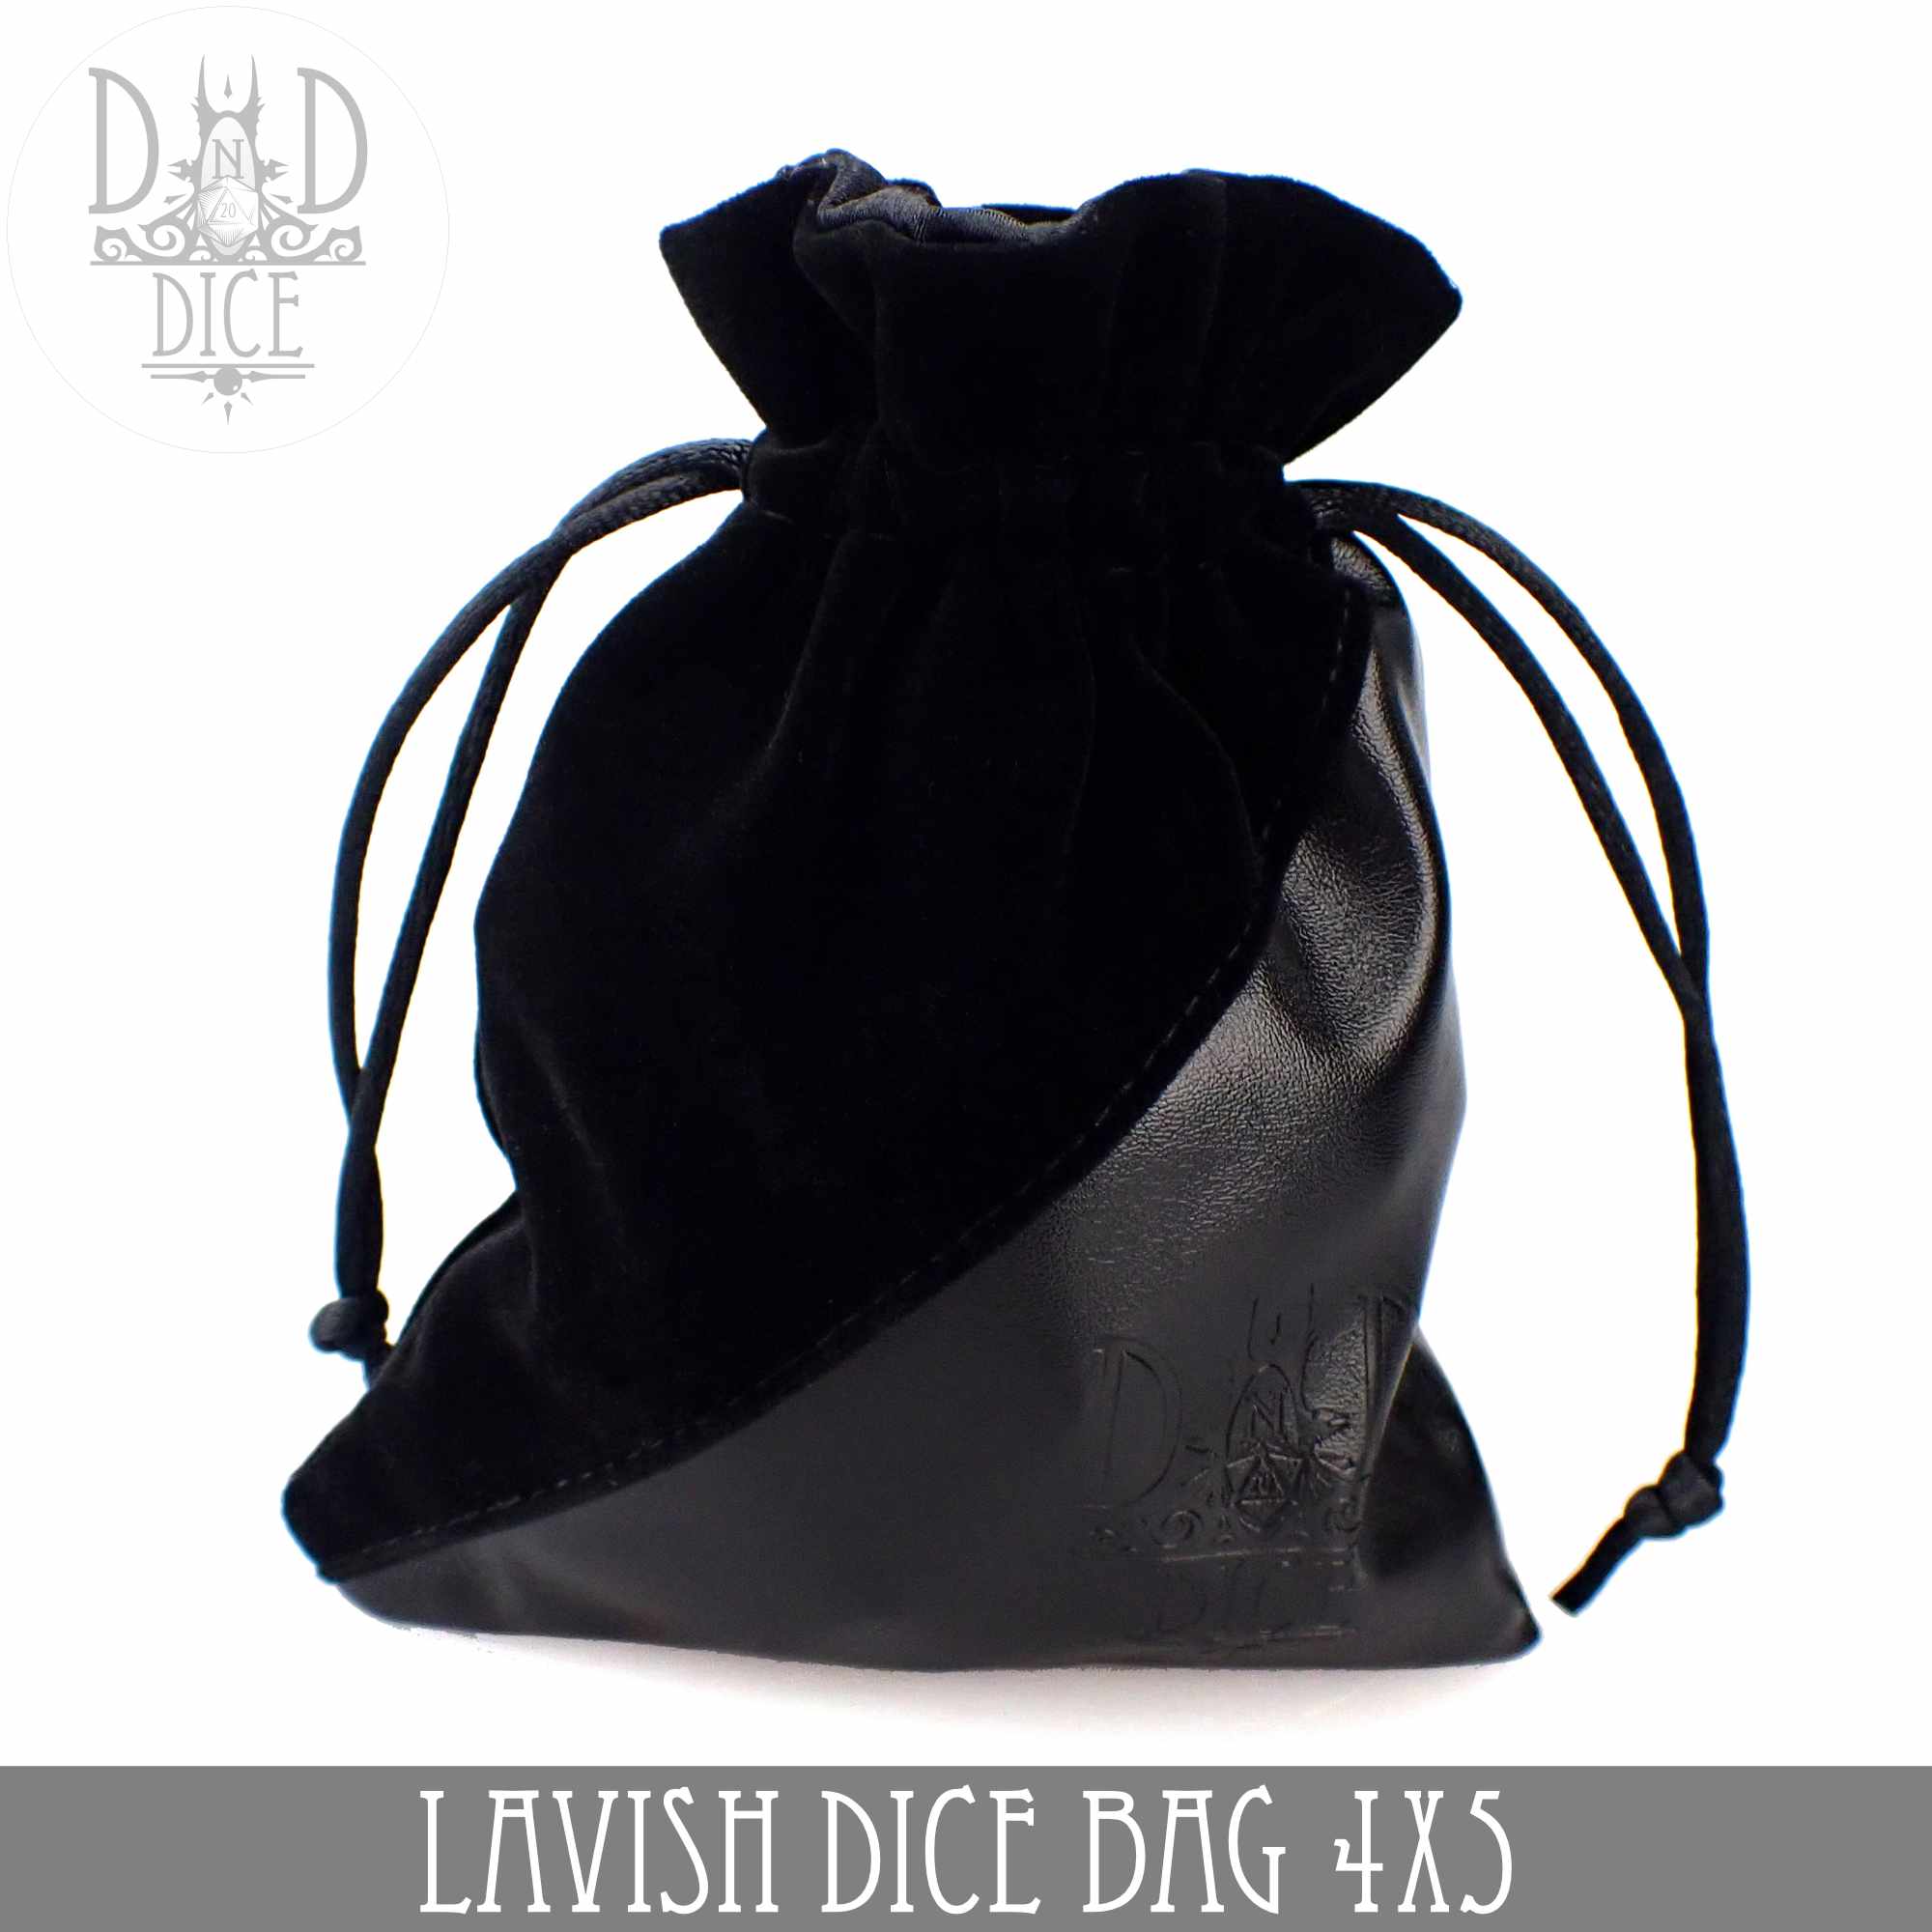 Lavish Dice Bag - (Small / 5 Colors)